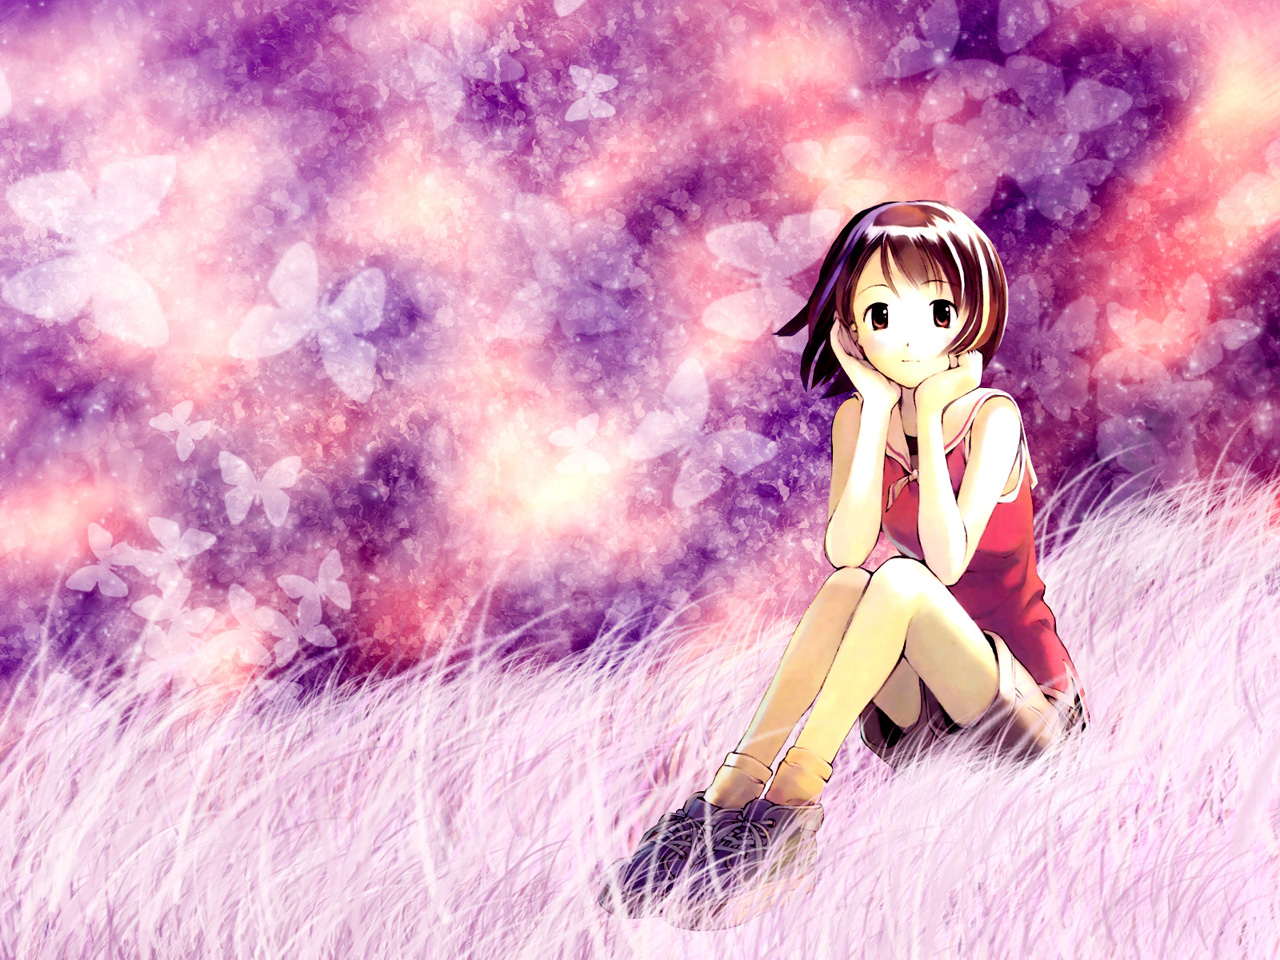 Wallpaper Of Cute Anime Girl Puter Desktop Image